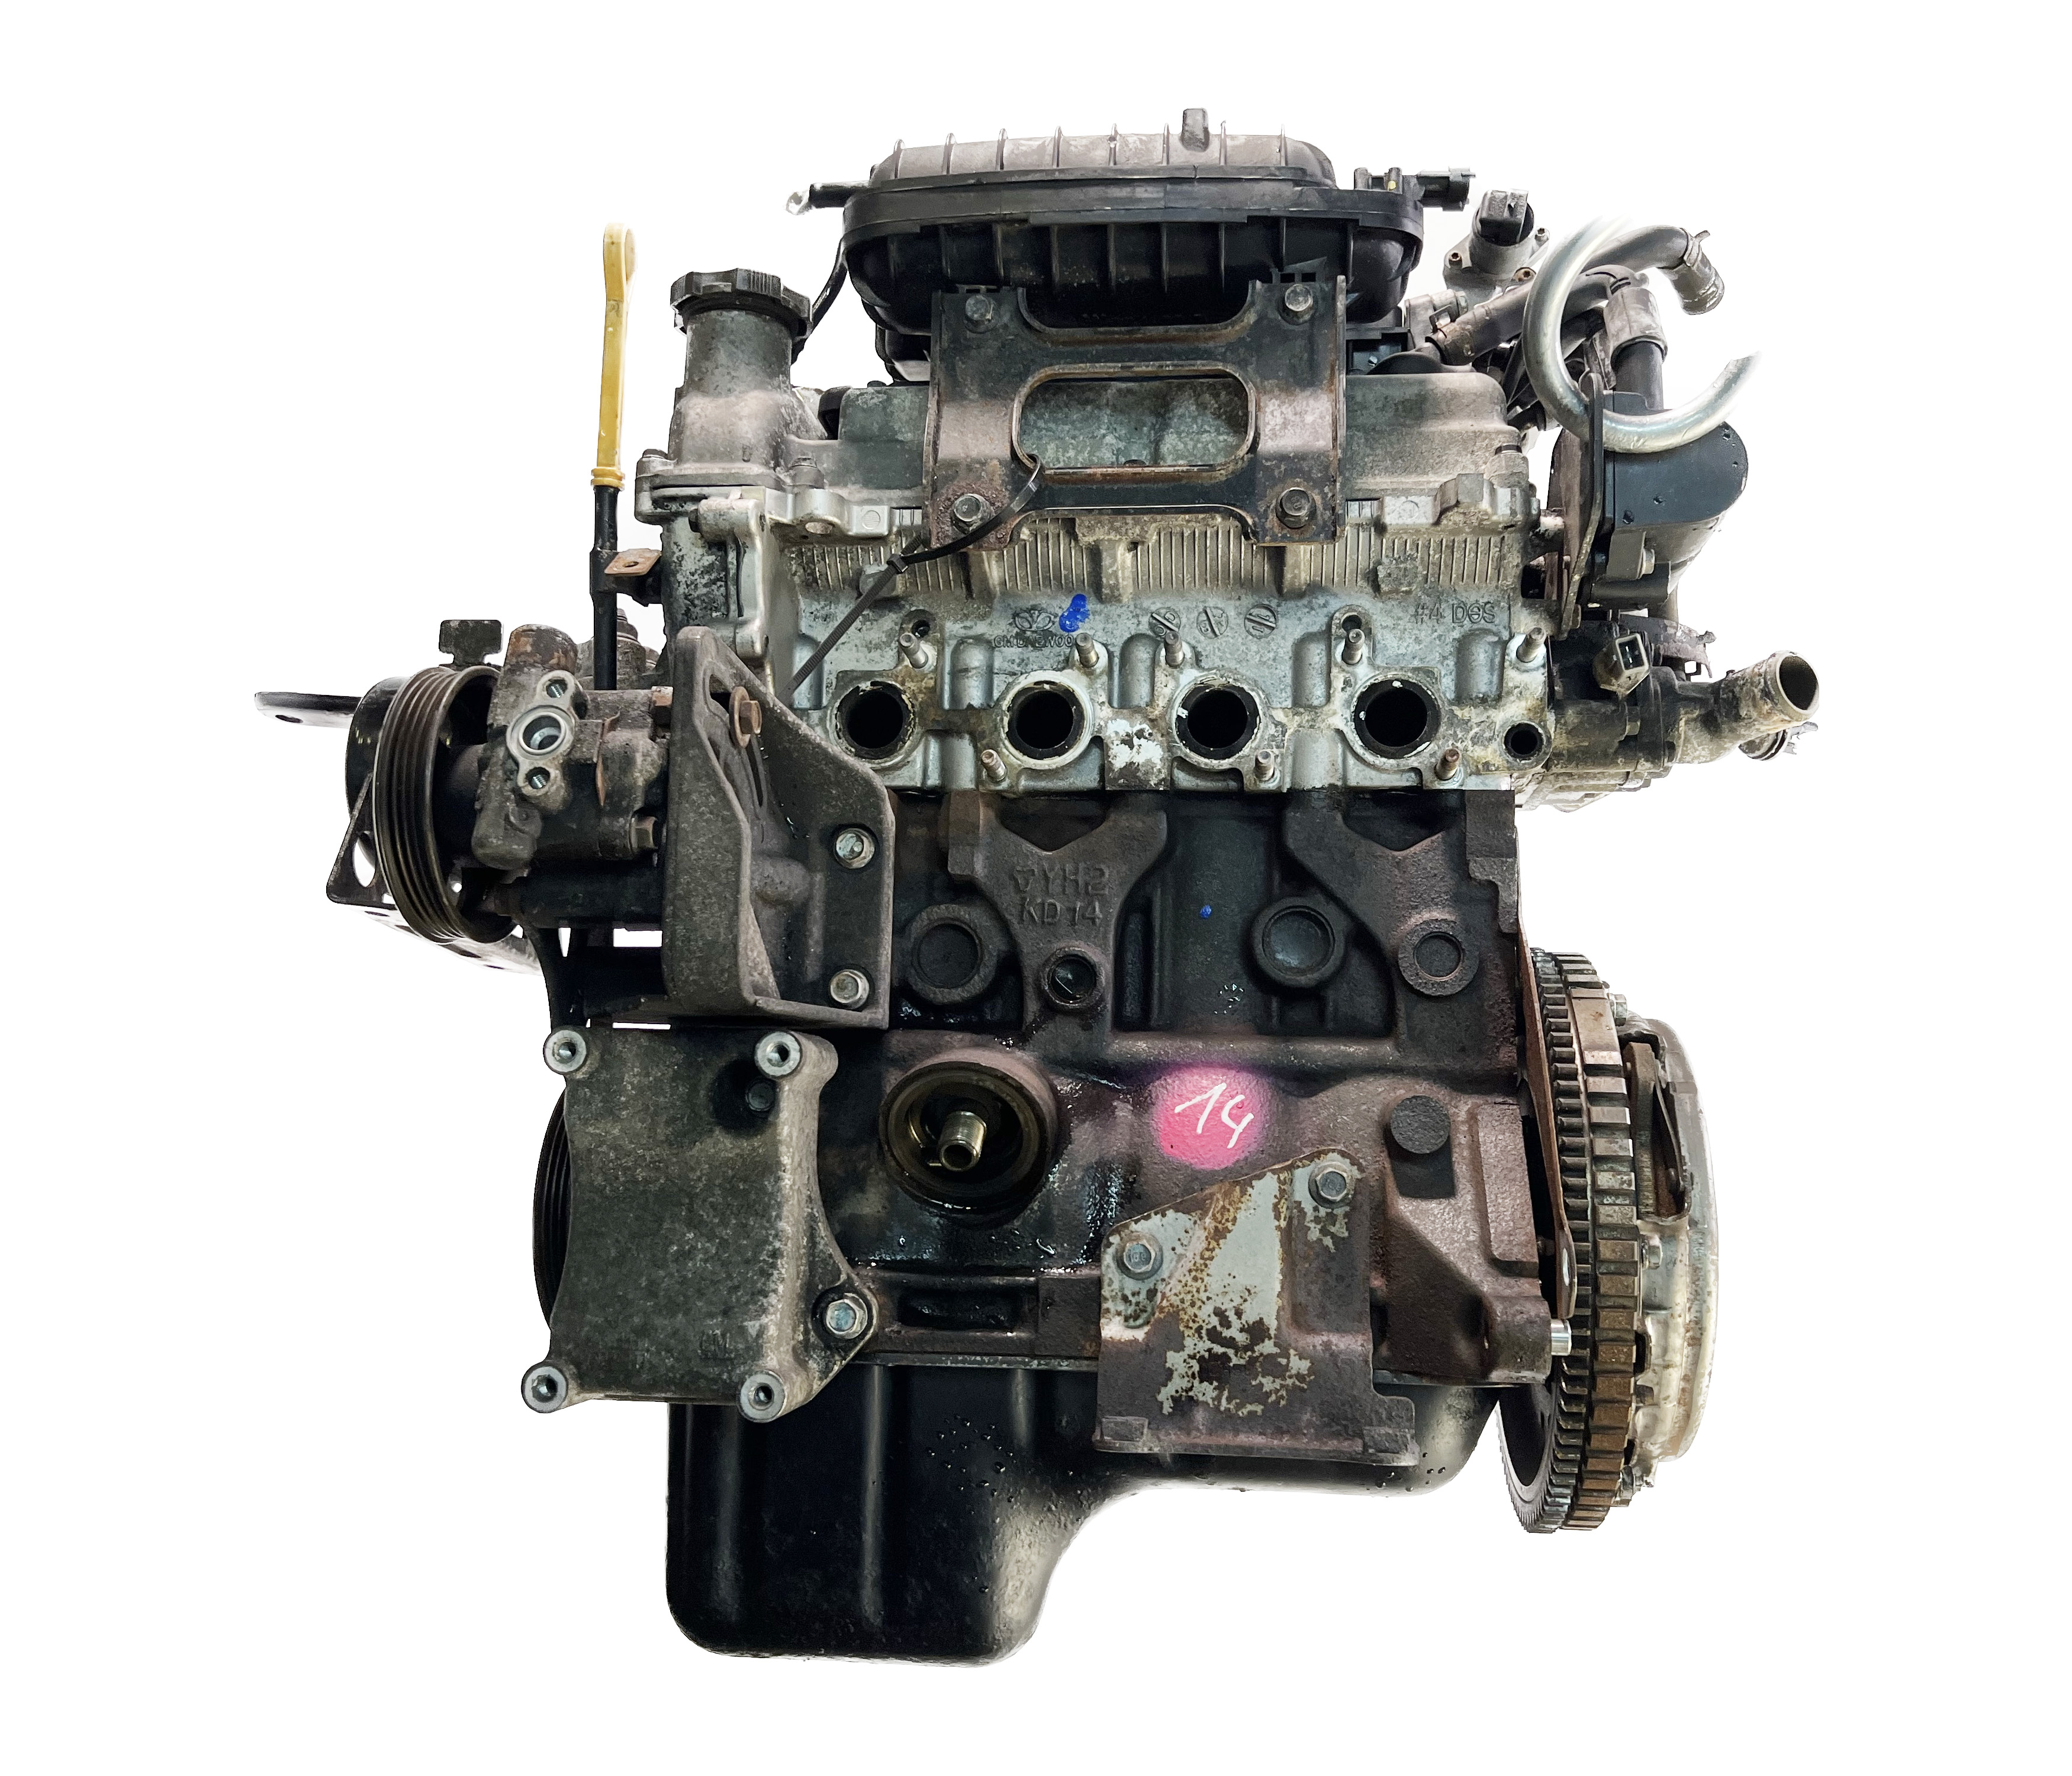 Engine for Chevrolet Spark M300 1.2 Petrol B12D1 LMU 115.000 KM | eBay